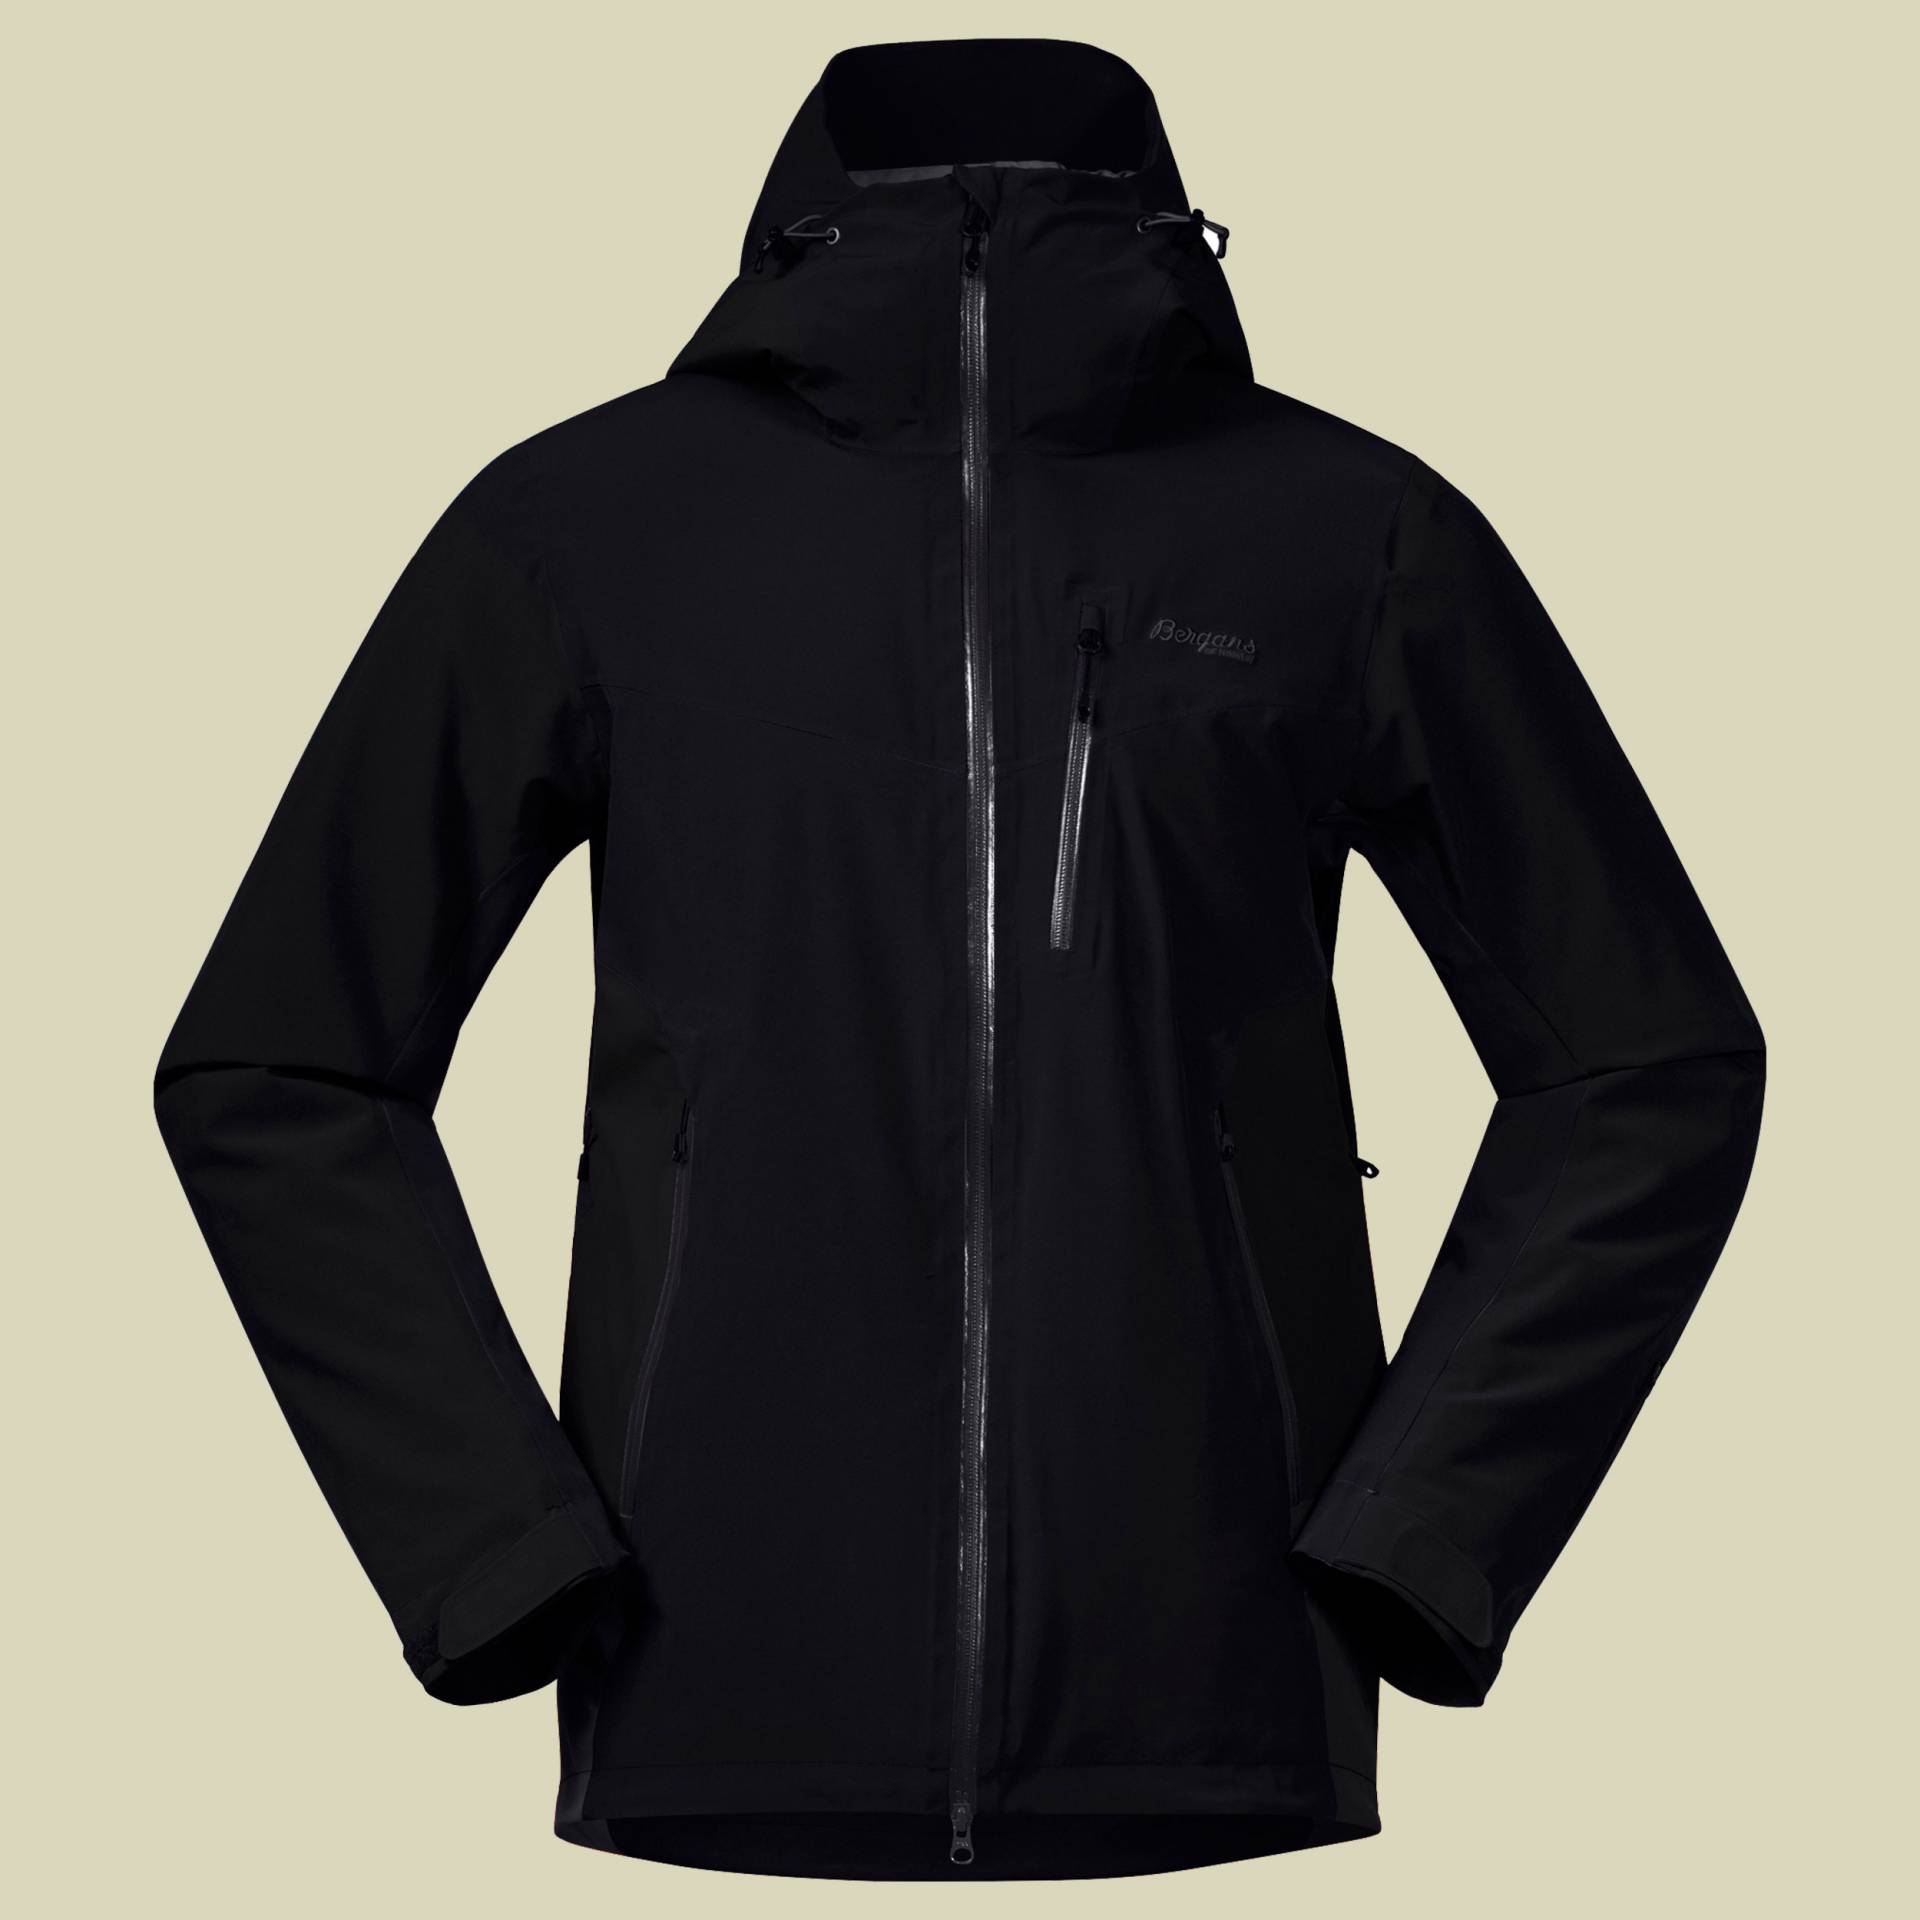 Oppdal Insulated Jacket Men Größe L  Farbe black/solid charcoal von bergans